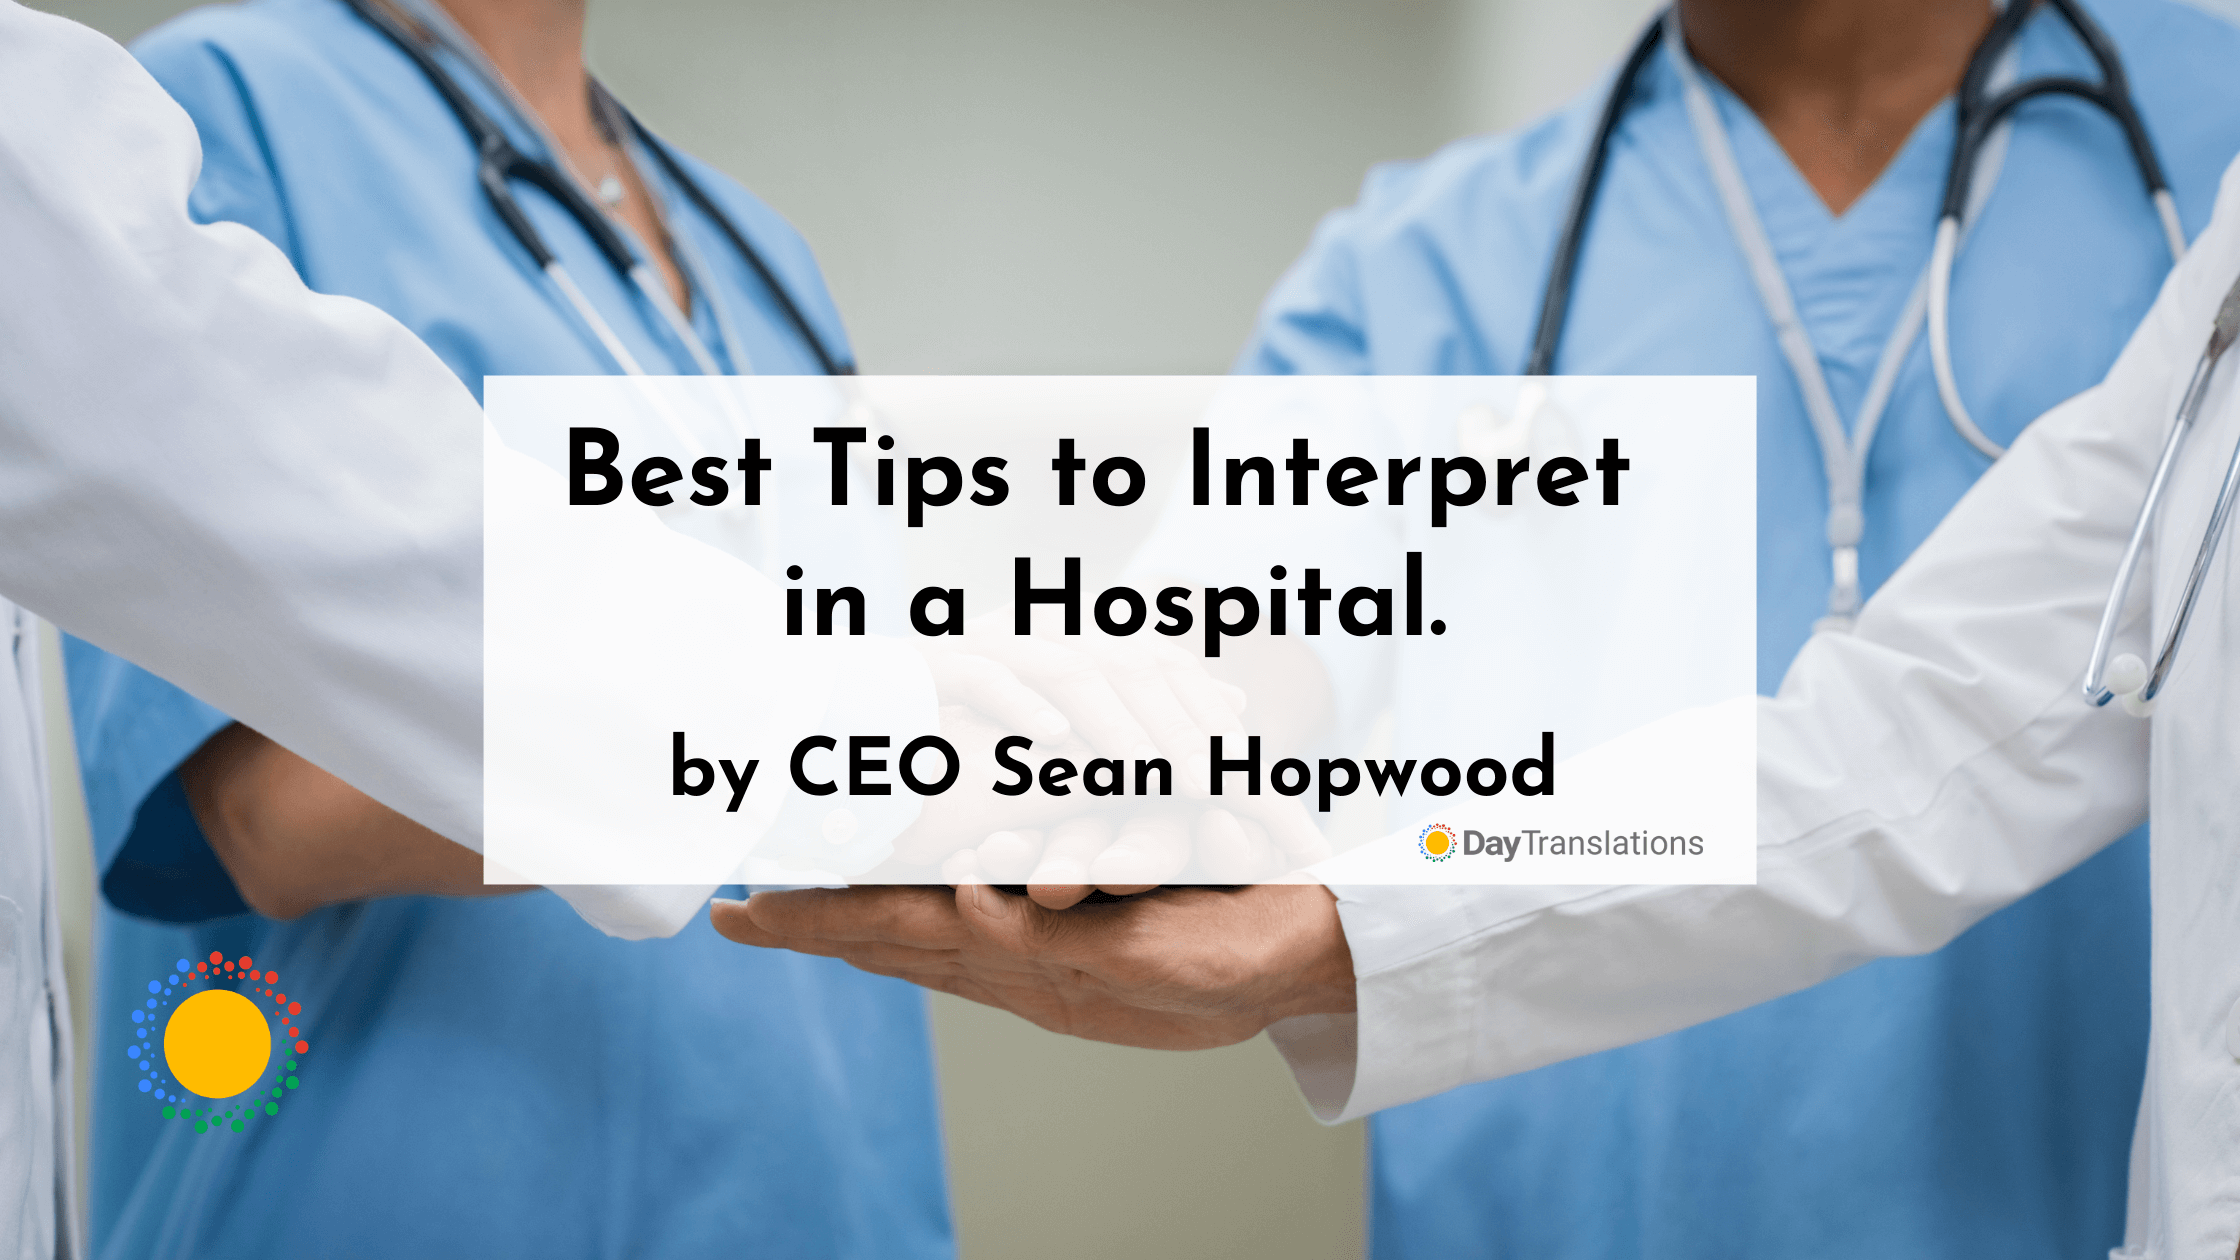 Best Tips to Interpret in a Hospital by Sean Hopwood